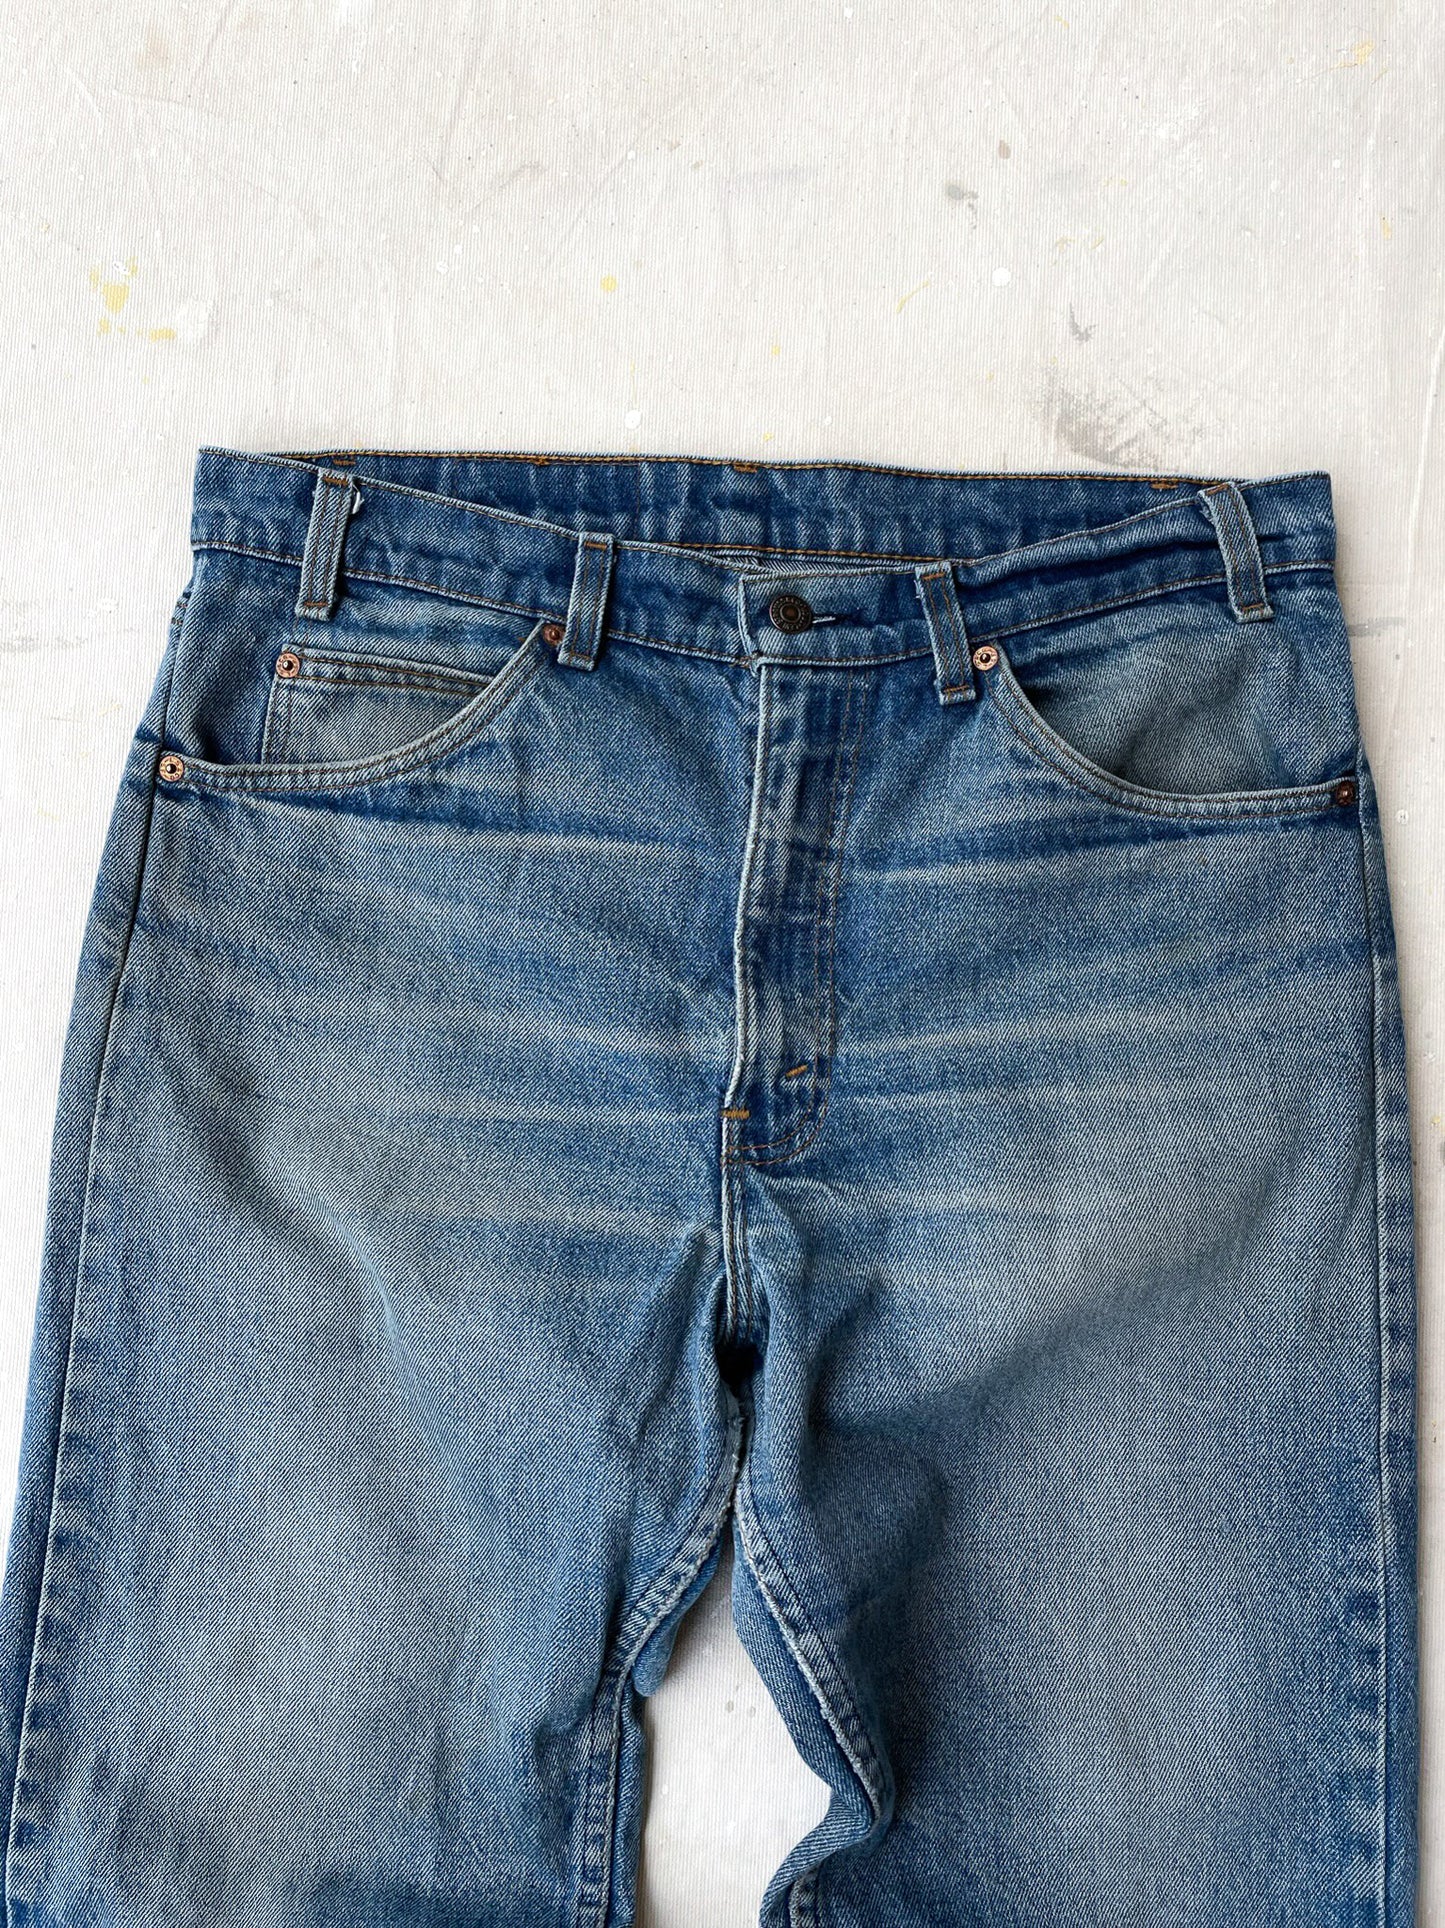 Levi's 505 Orange Tab Jeans—[34X27]